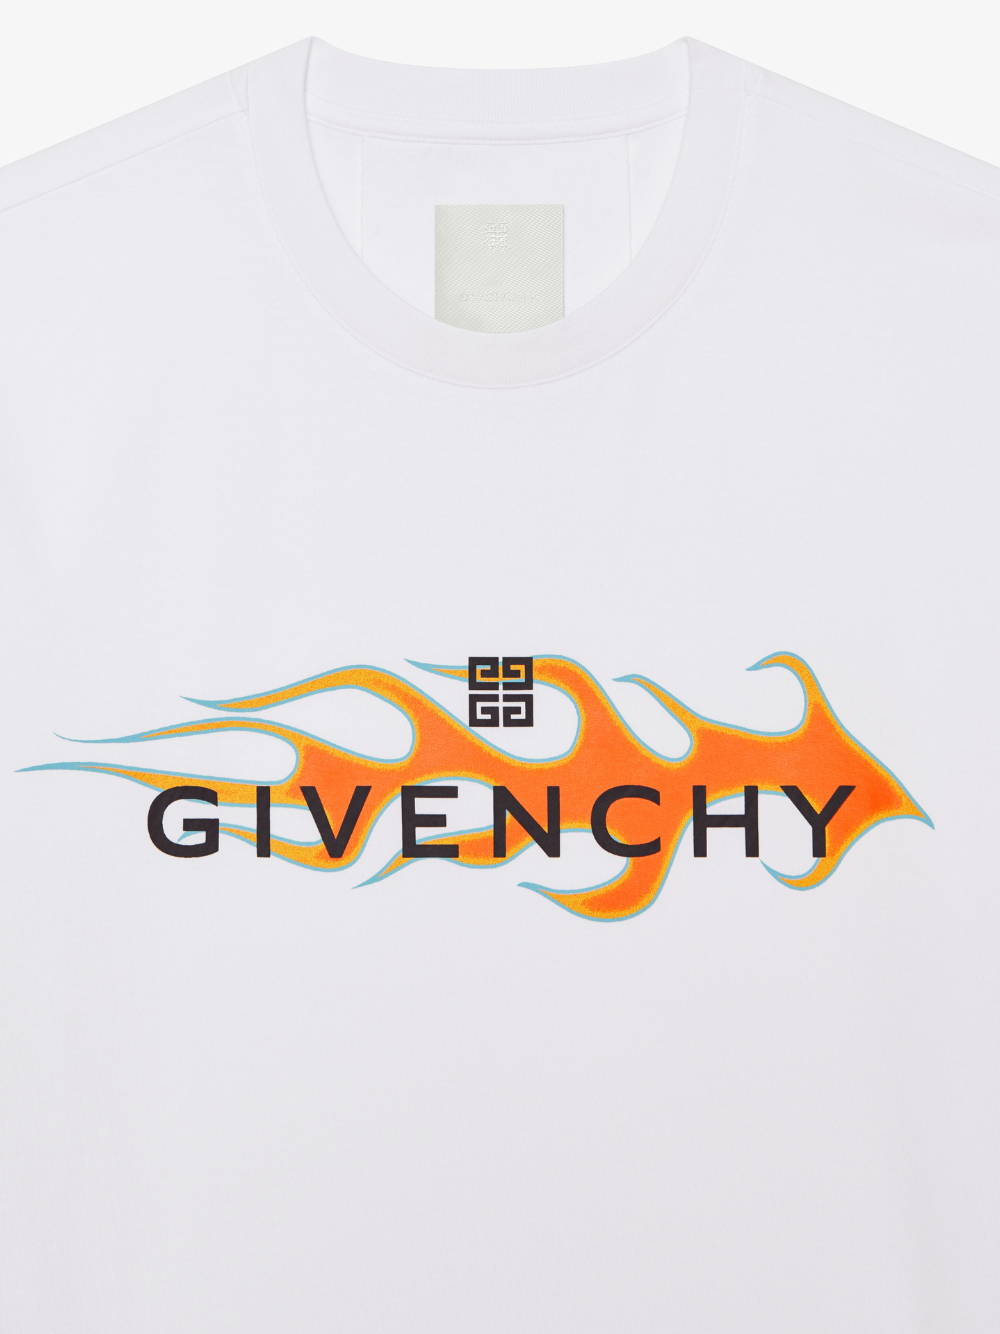 Givenchy flames t-shirt white and orange BM716G3YGE-100